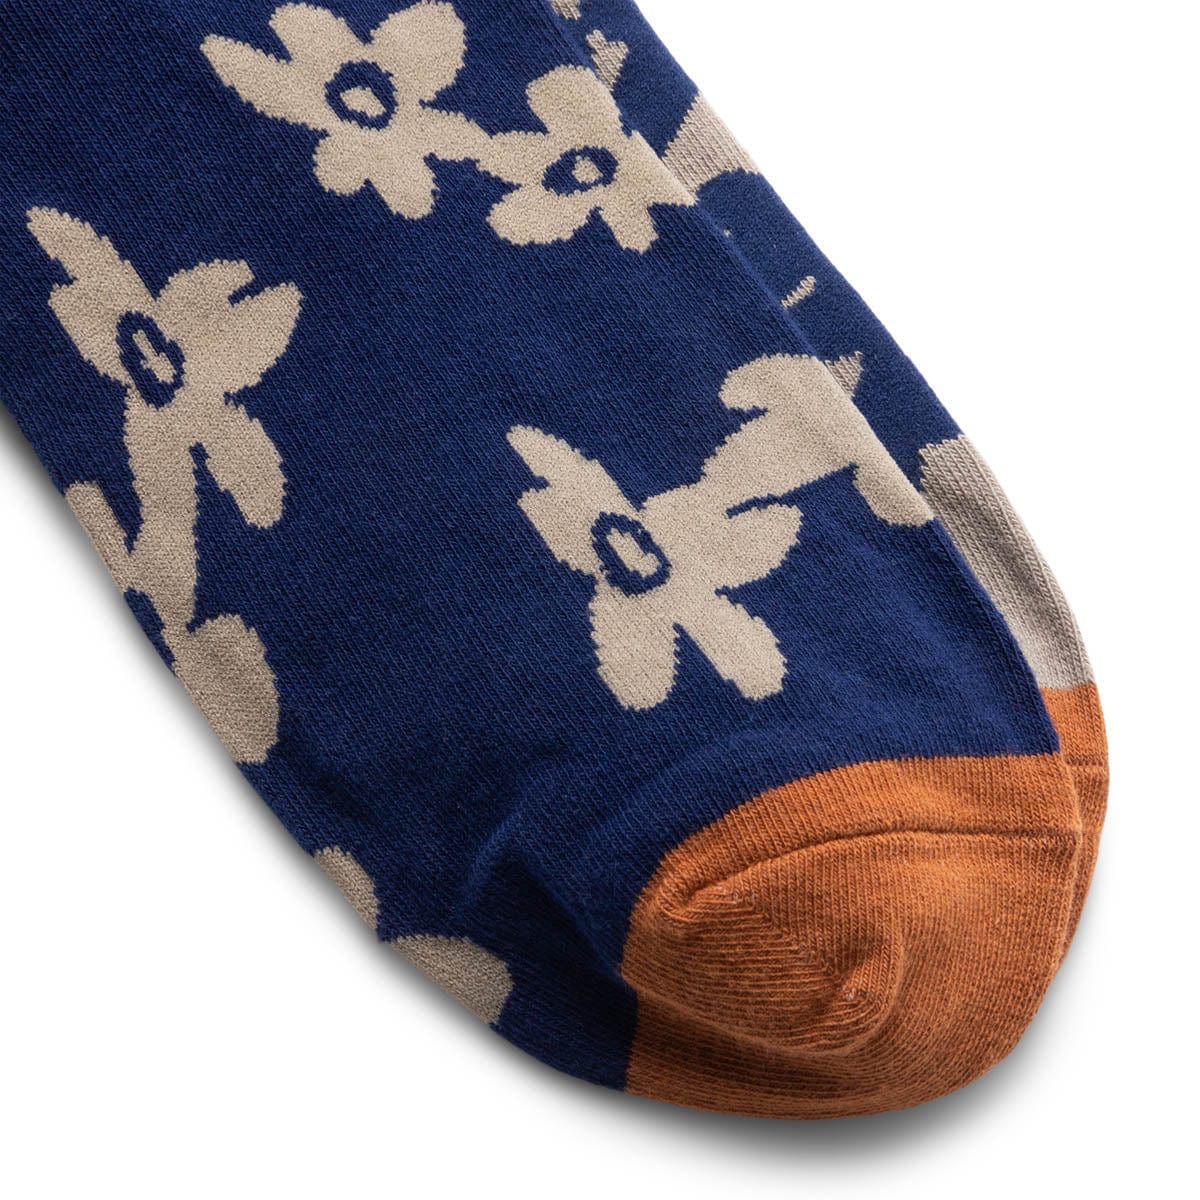 Perks and Mini Socks INK BLUE / O/S FLOATING GESTURES SOCK